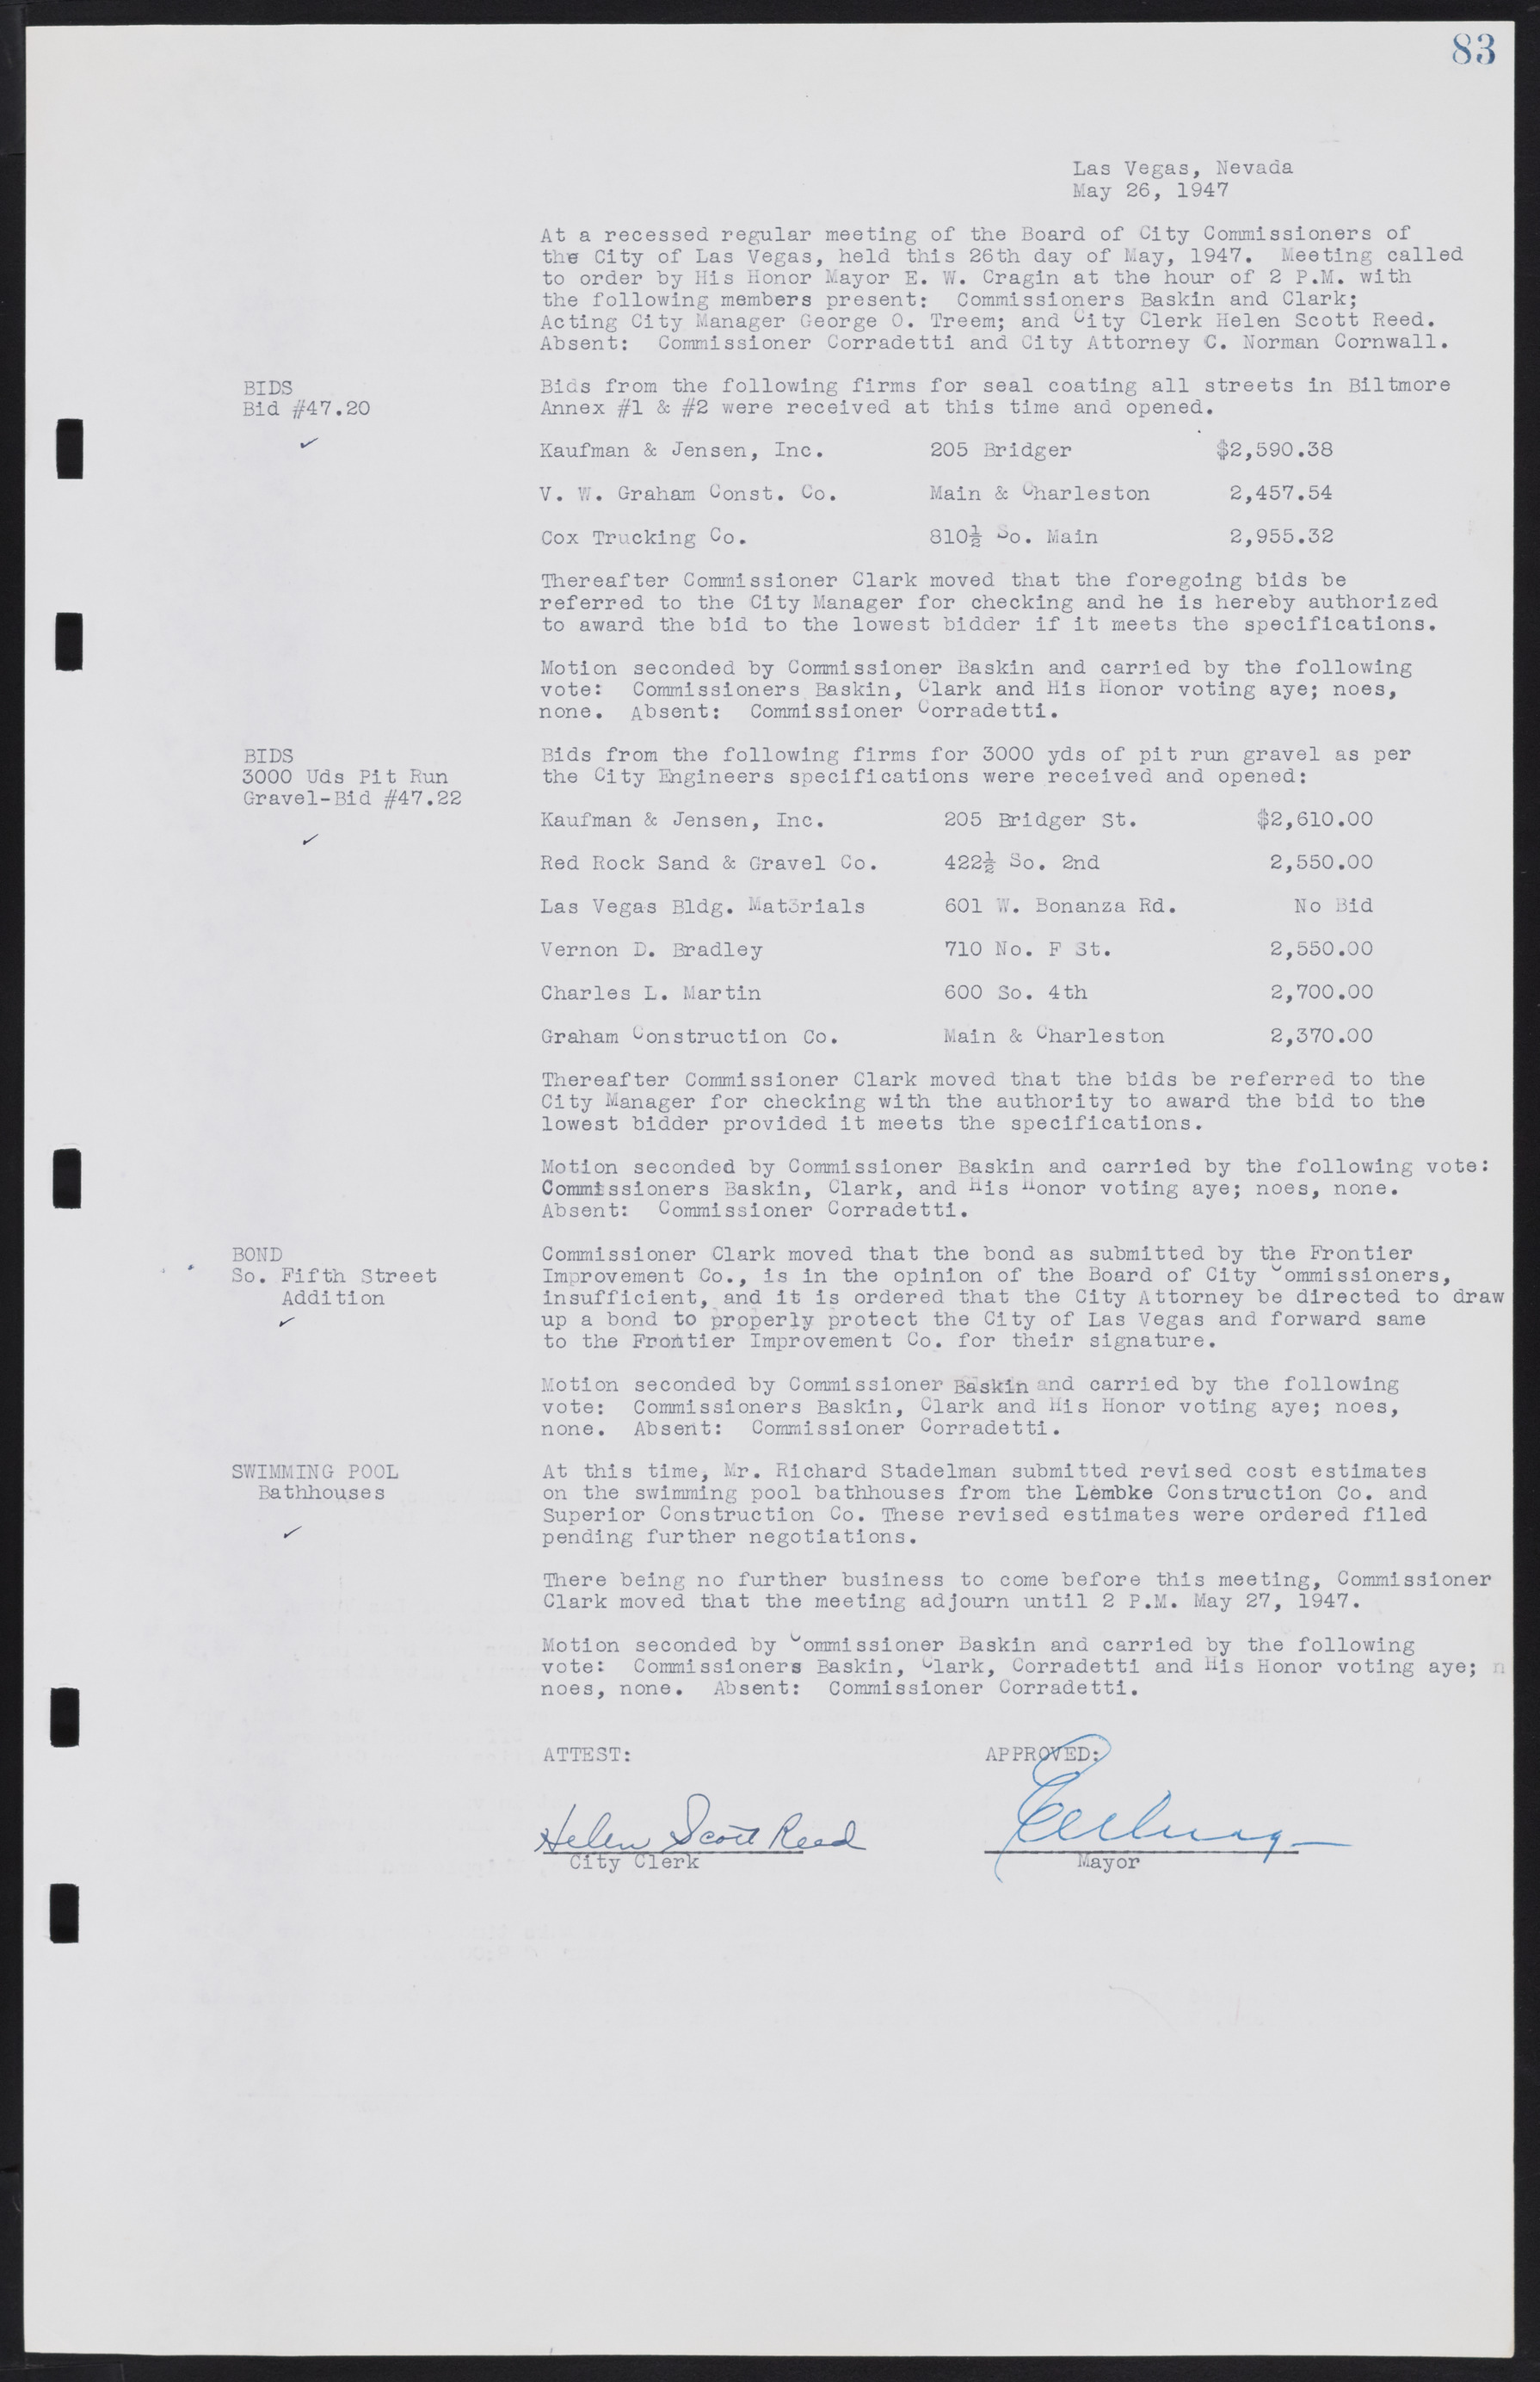 Las Vegas City Commission Minutes, January 7, 1947 to October 26, 1949, lvc000006-98